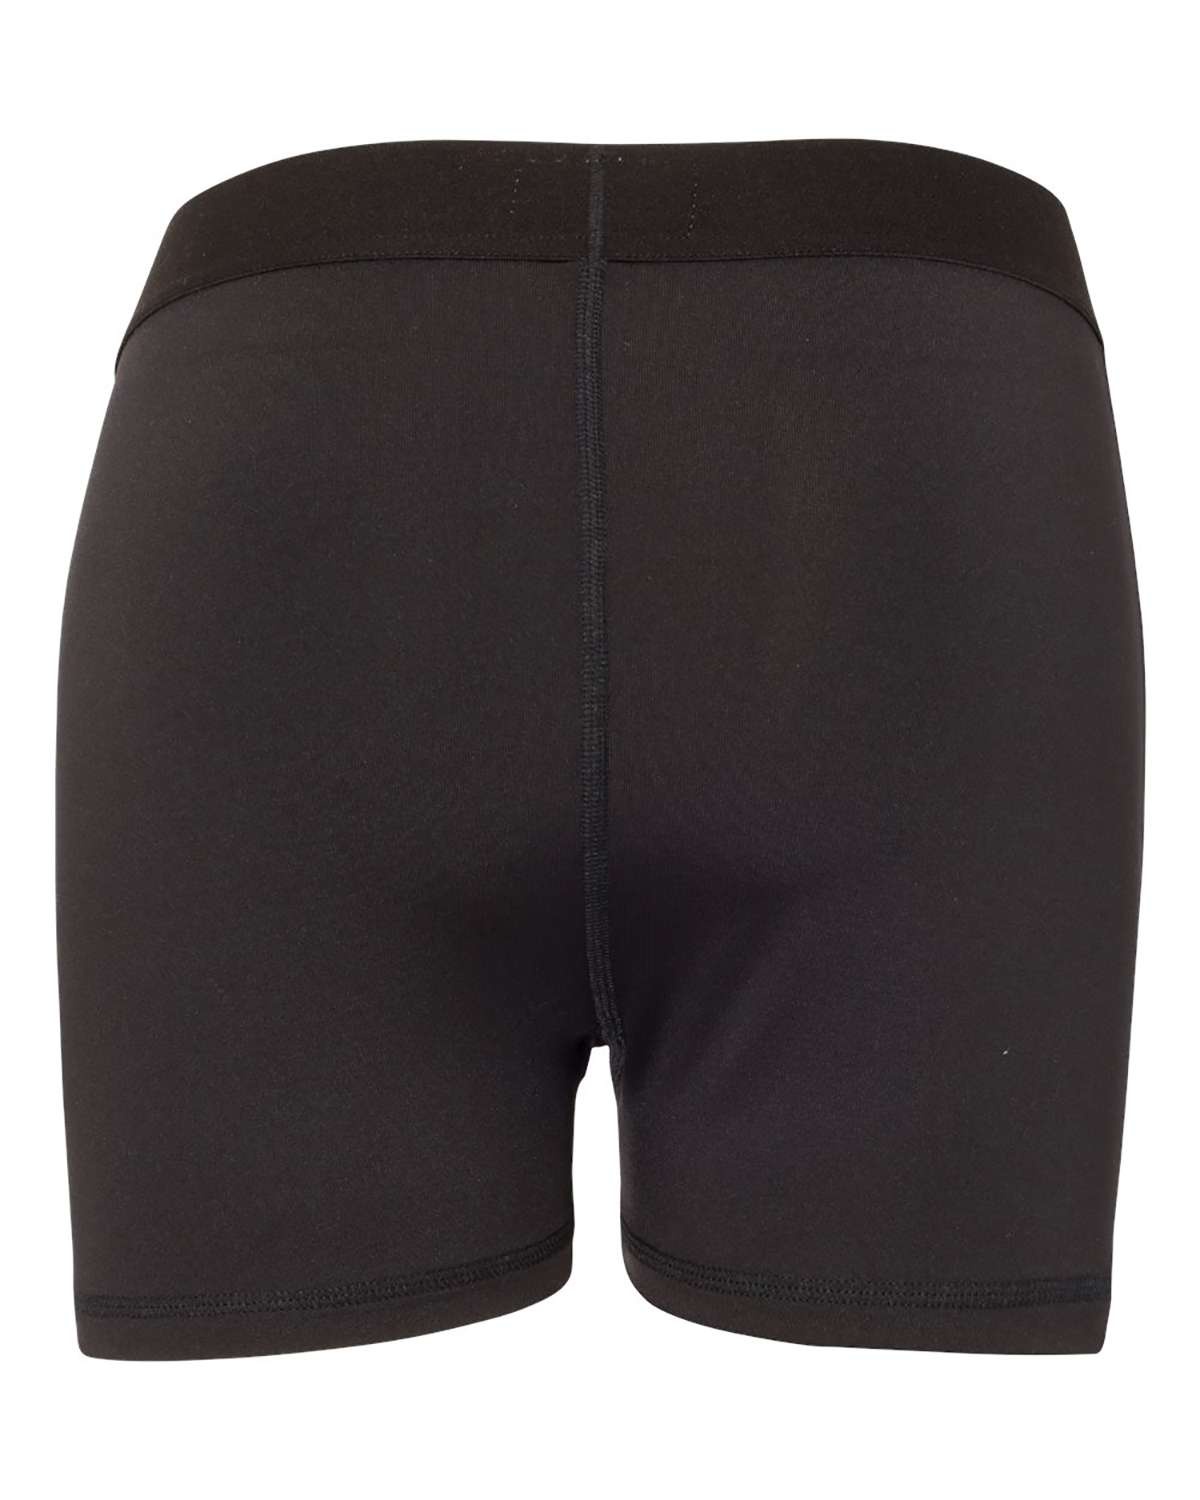 'Badger 4629 Pro-Compression Women's Shorts'